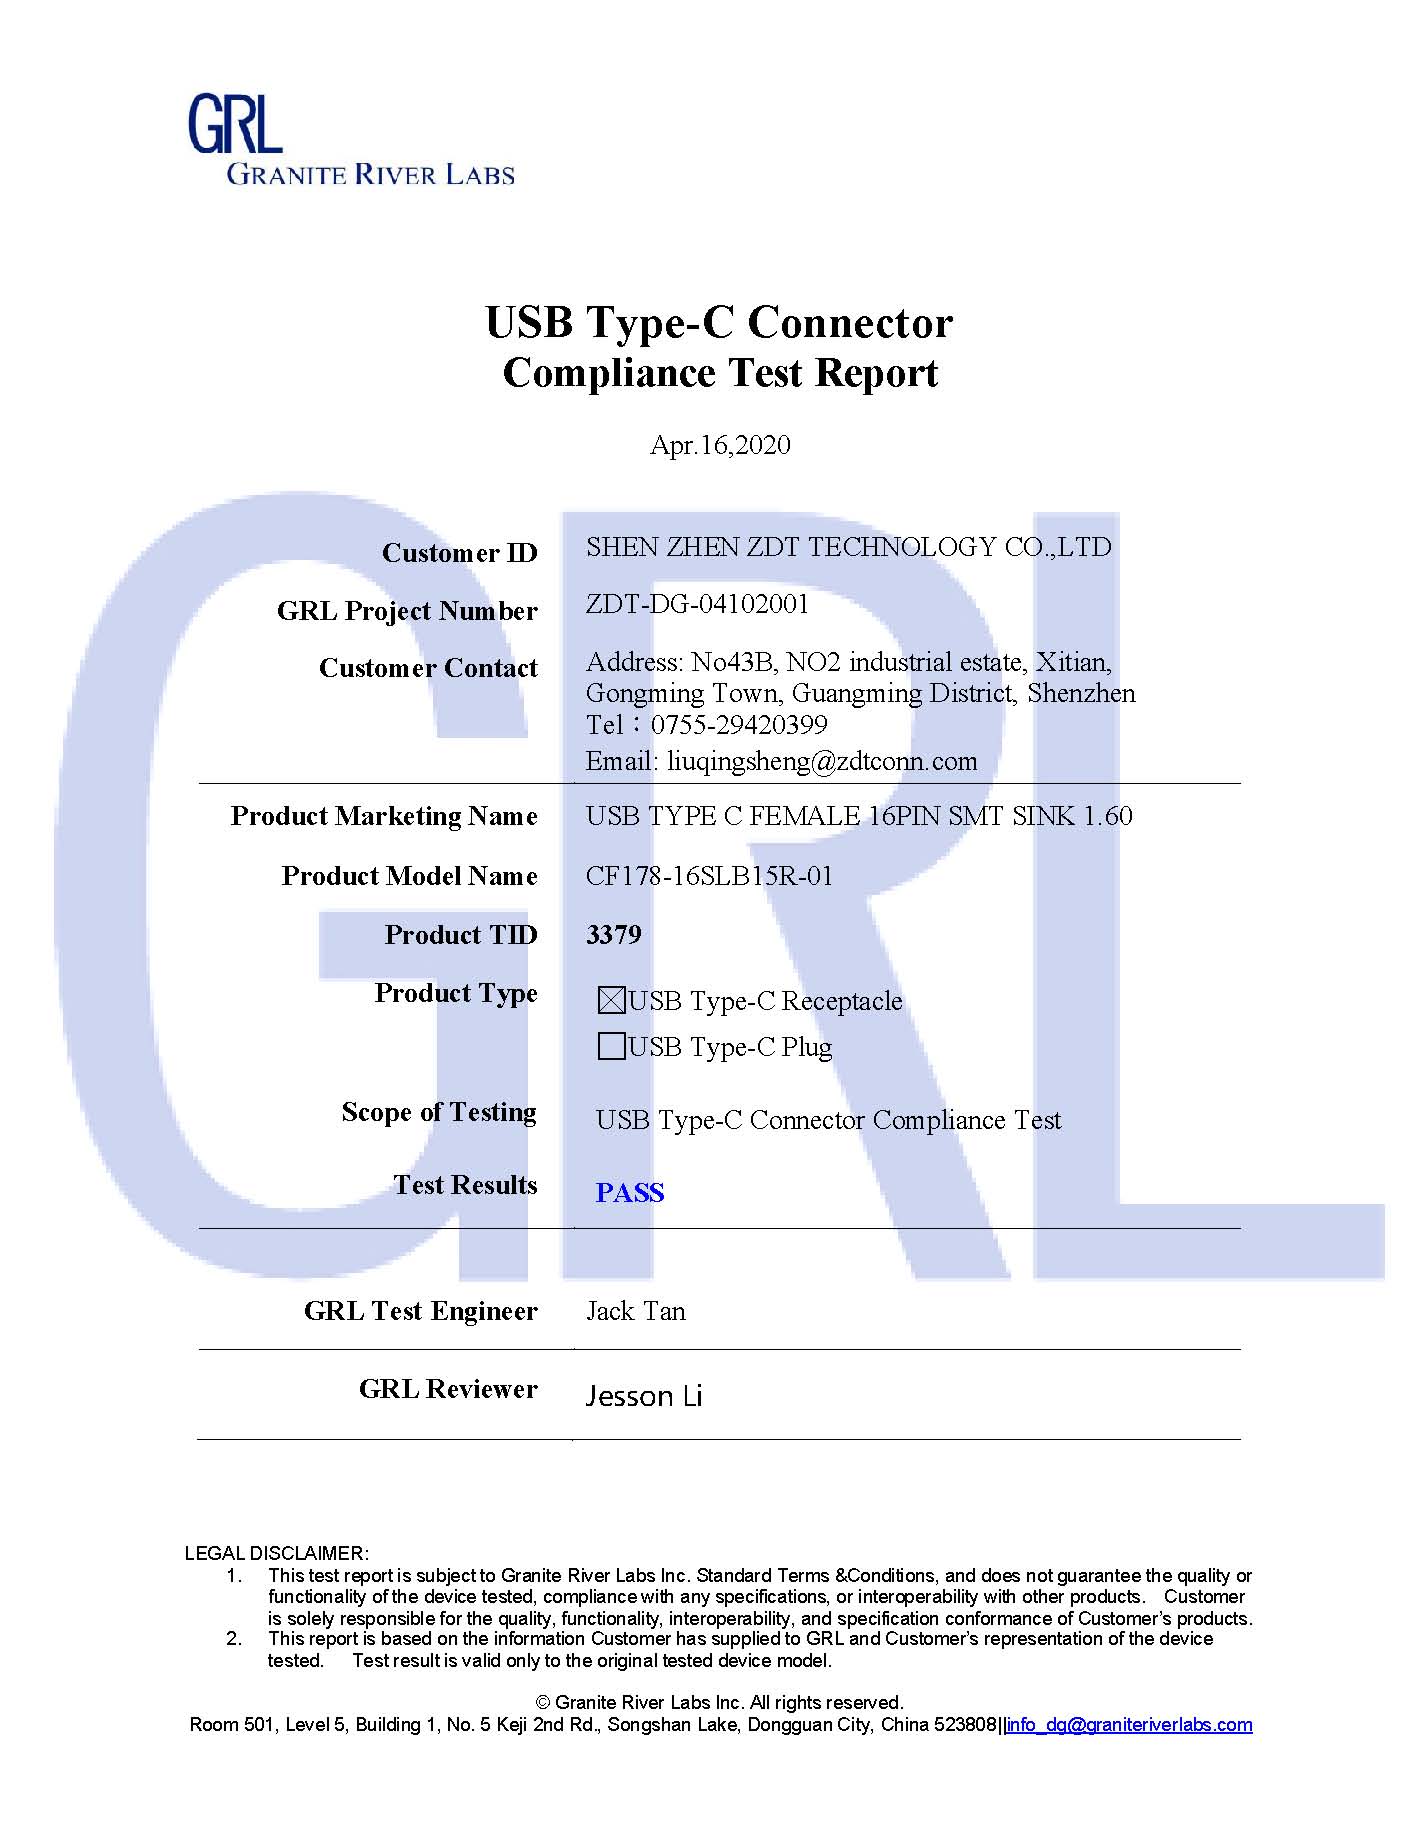 CF178-16SLB15R-01 USB TYPE C FEMALE 16PIN SMT SINK 1.60 协会测试报告TID3379.jpg